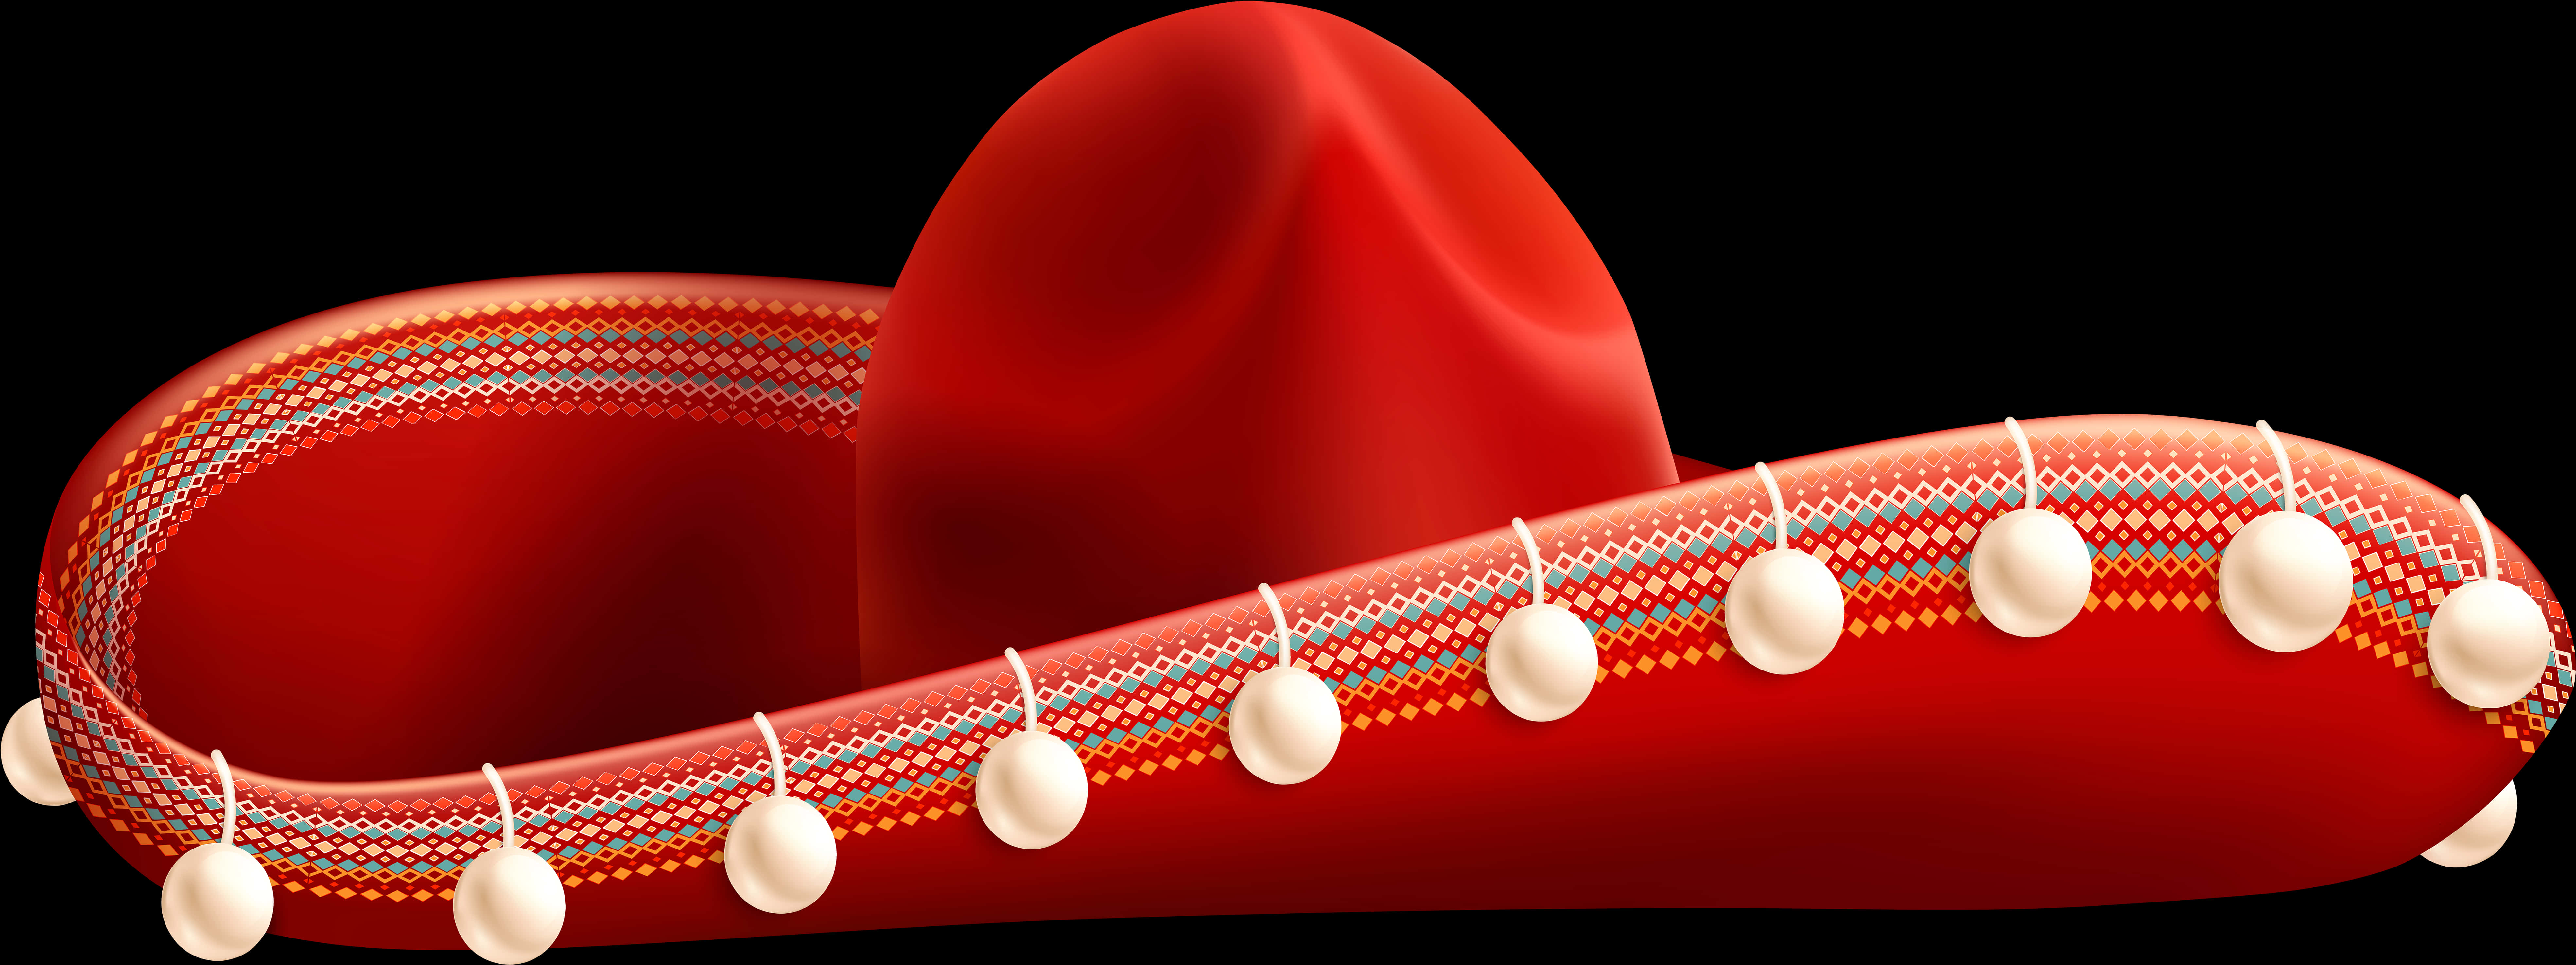 Red Sombrero Hat Graphic